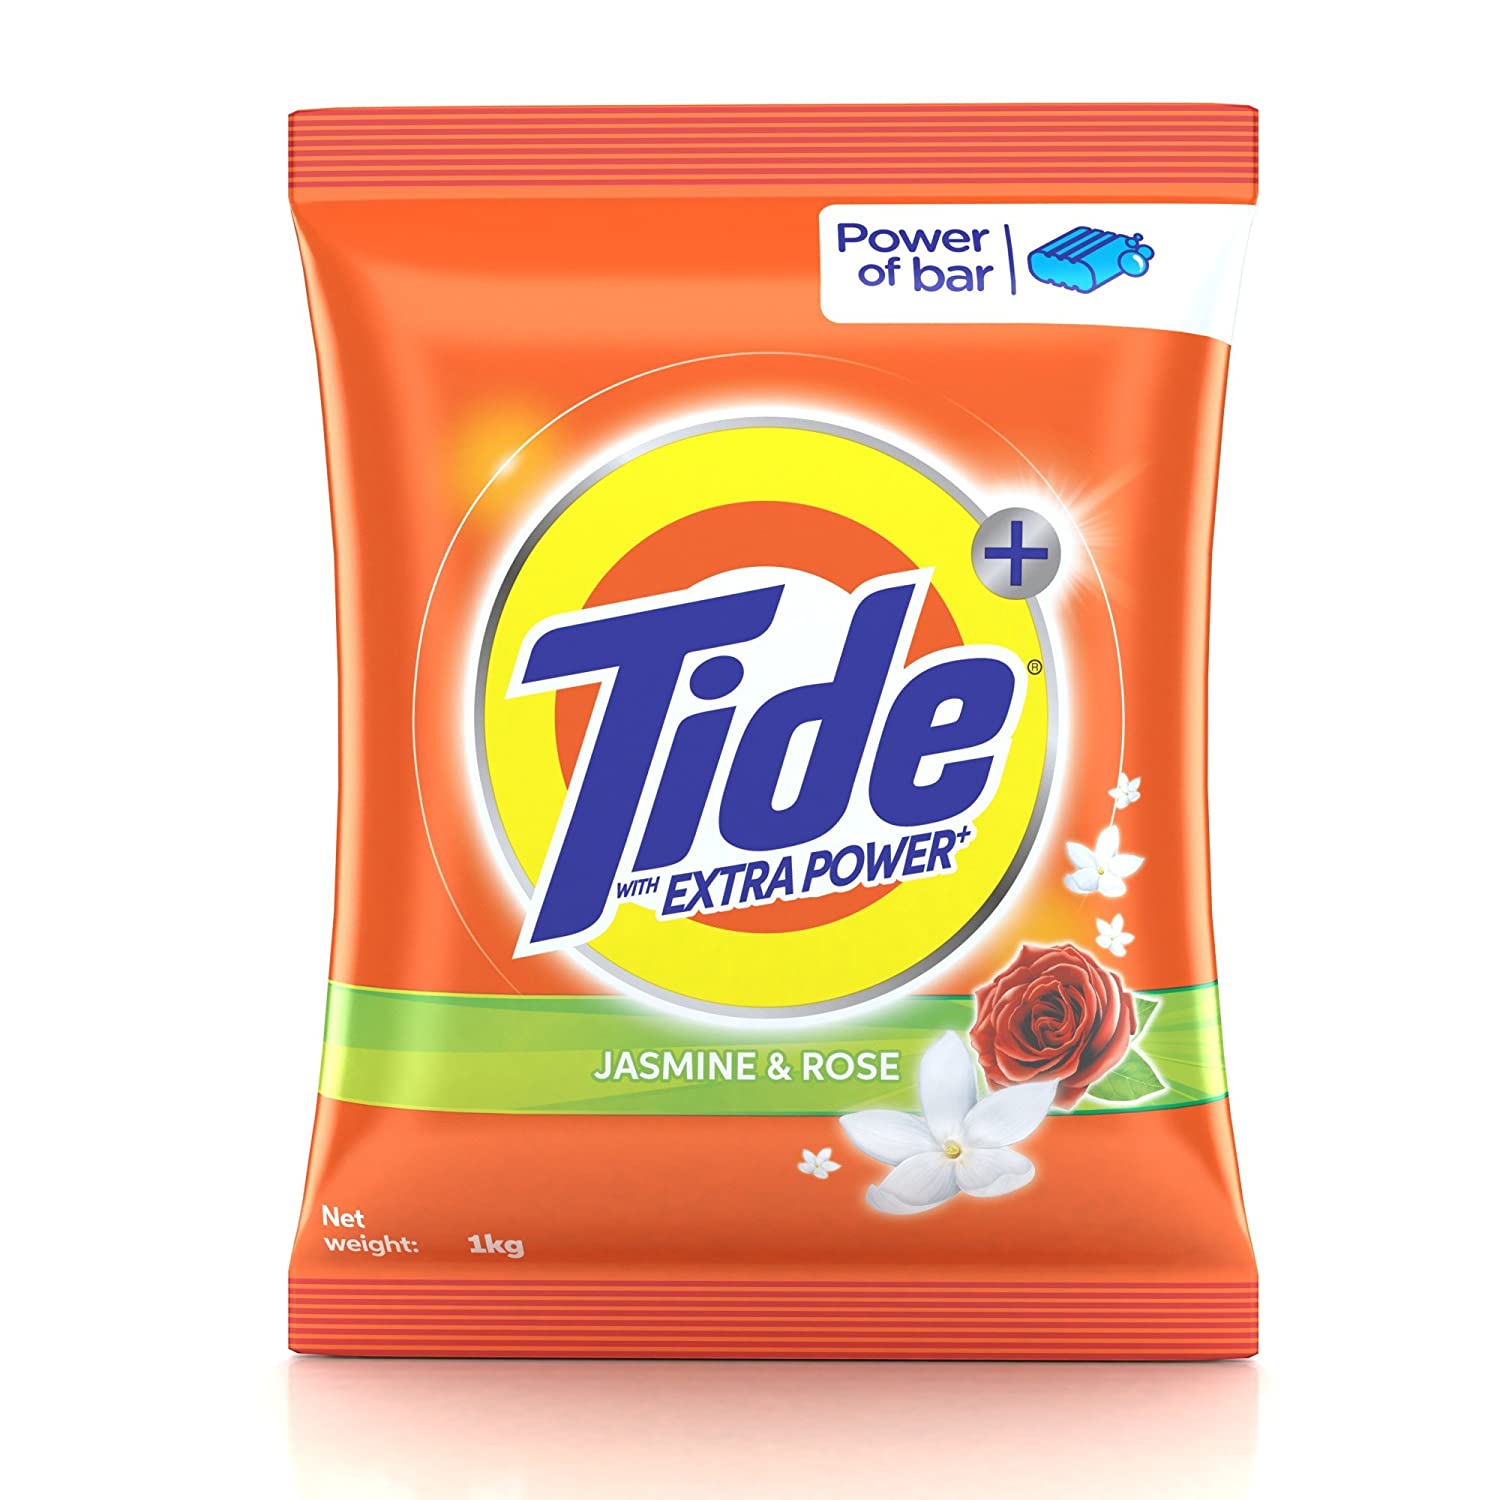 Tide Plus Detergent Powder - Jasmine & Rose : 4 kgs